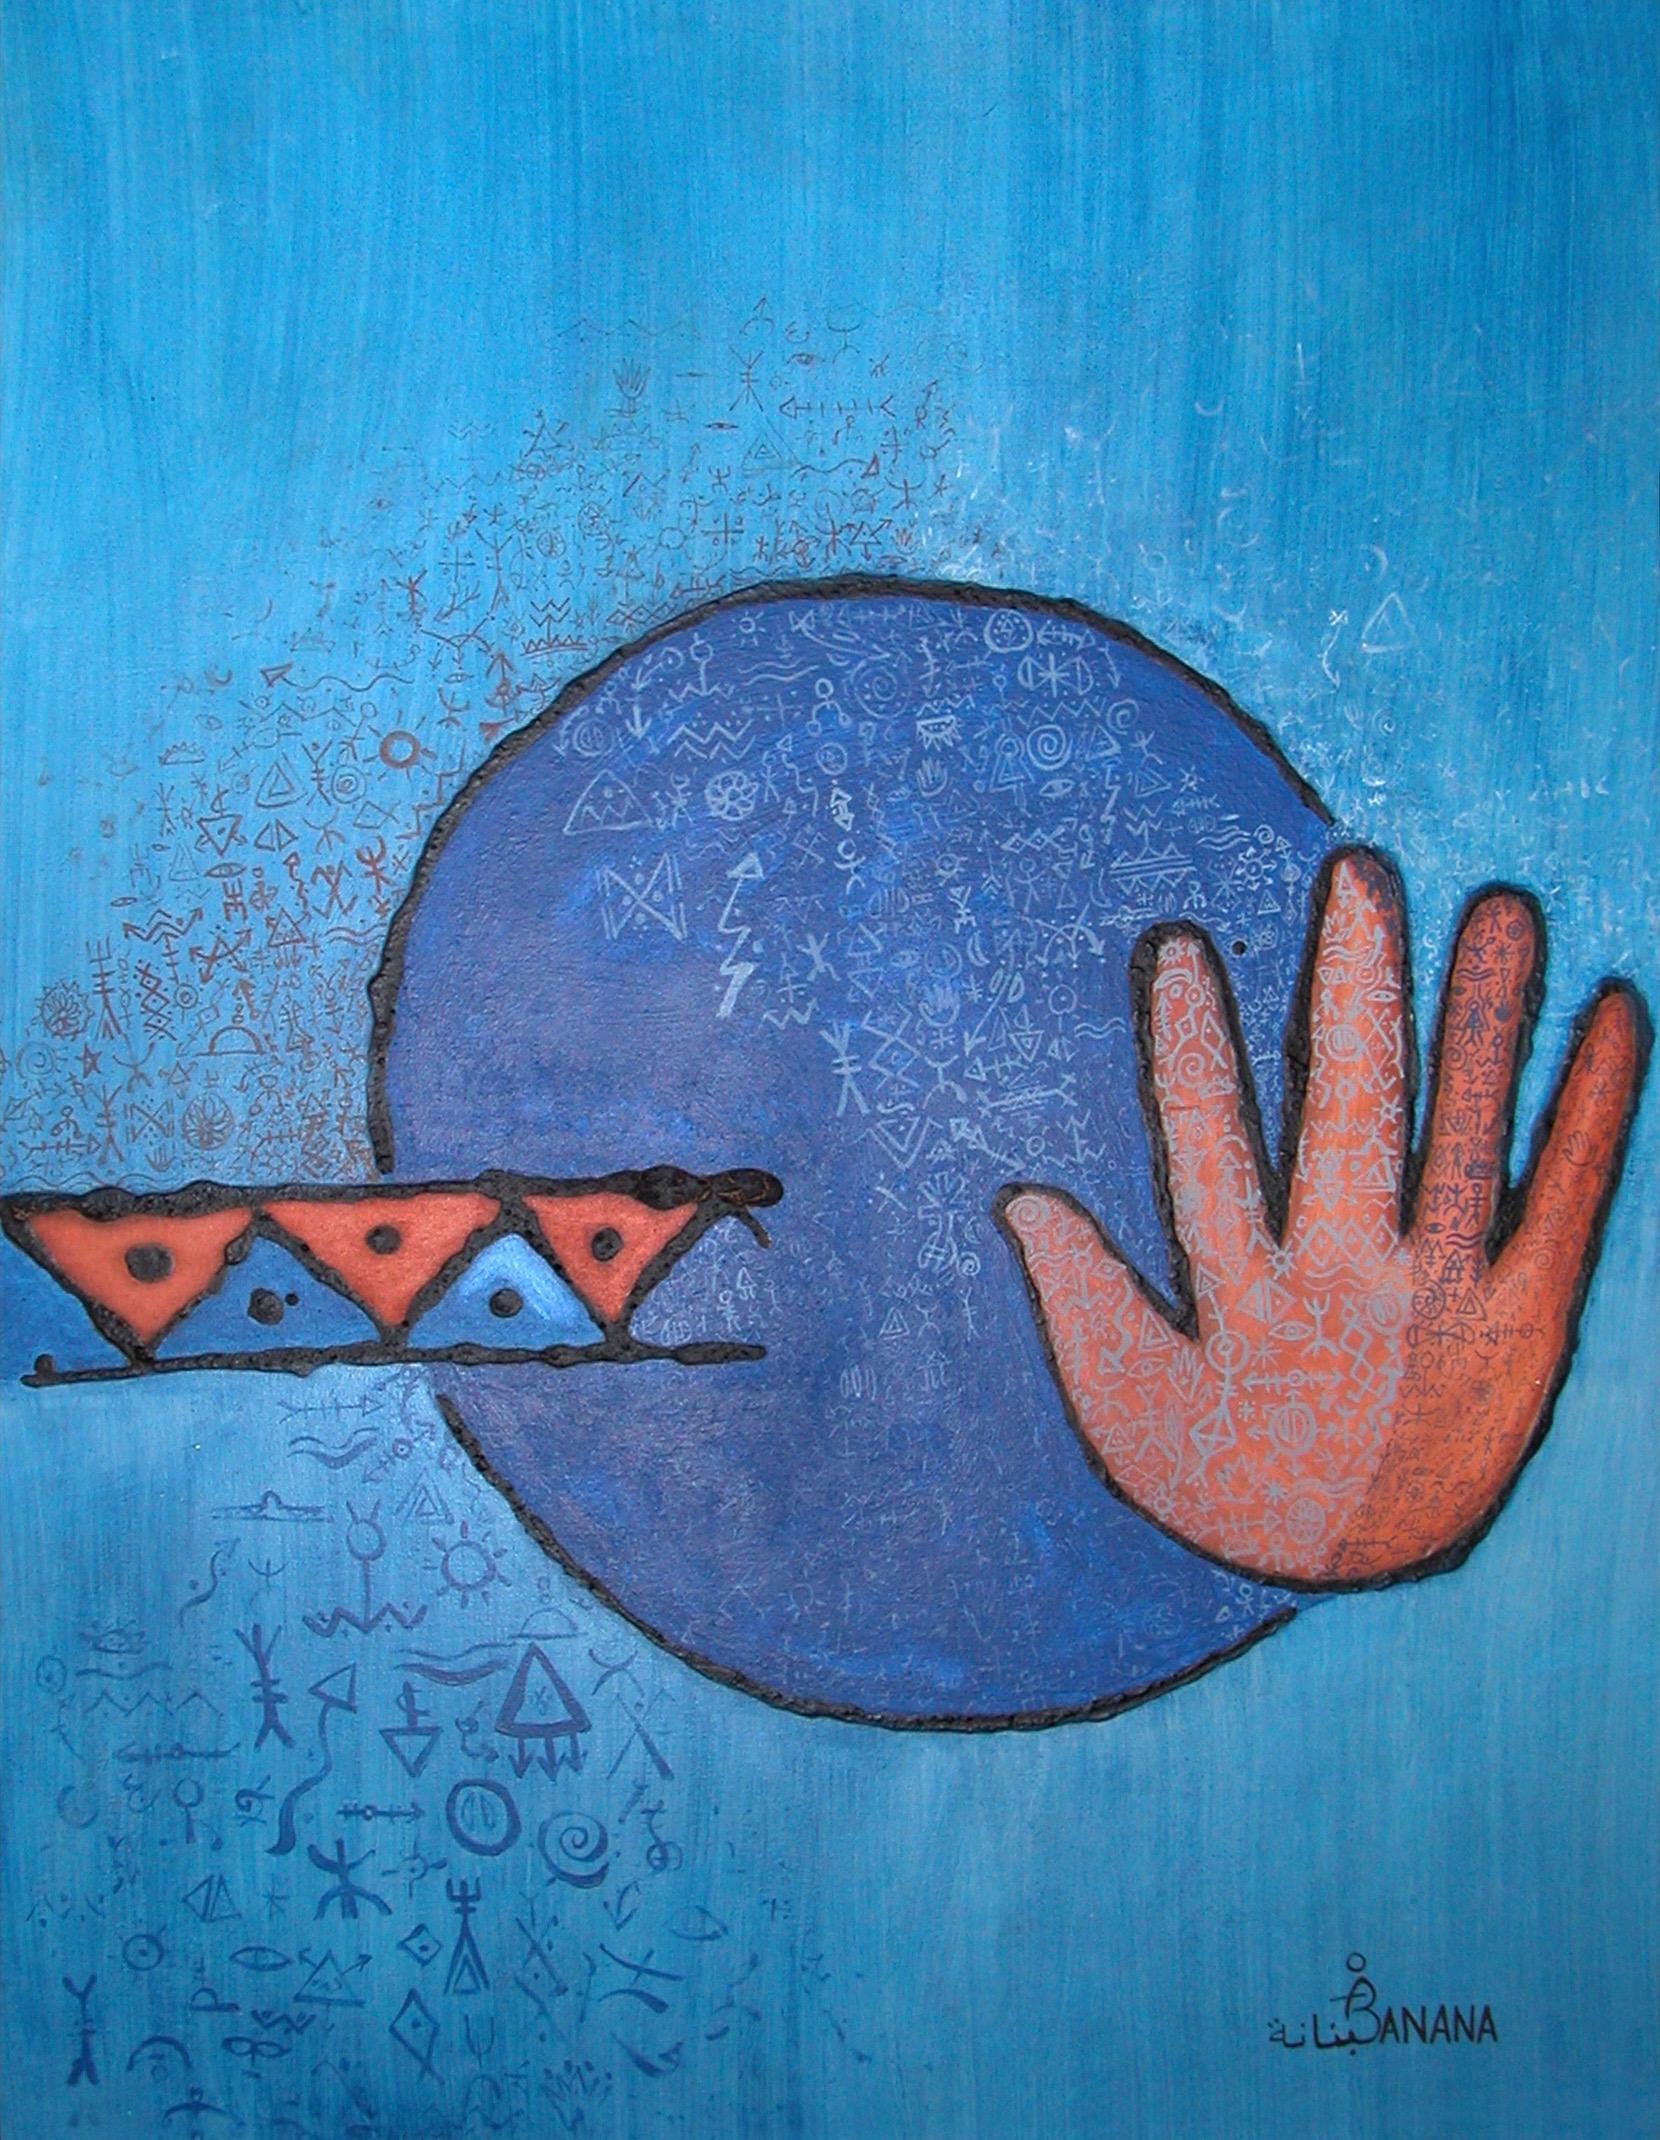 Abderrahman Banana Figurative Painting - Abstract blue painting with hand symbol